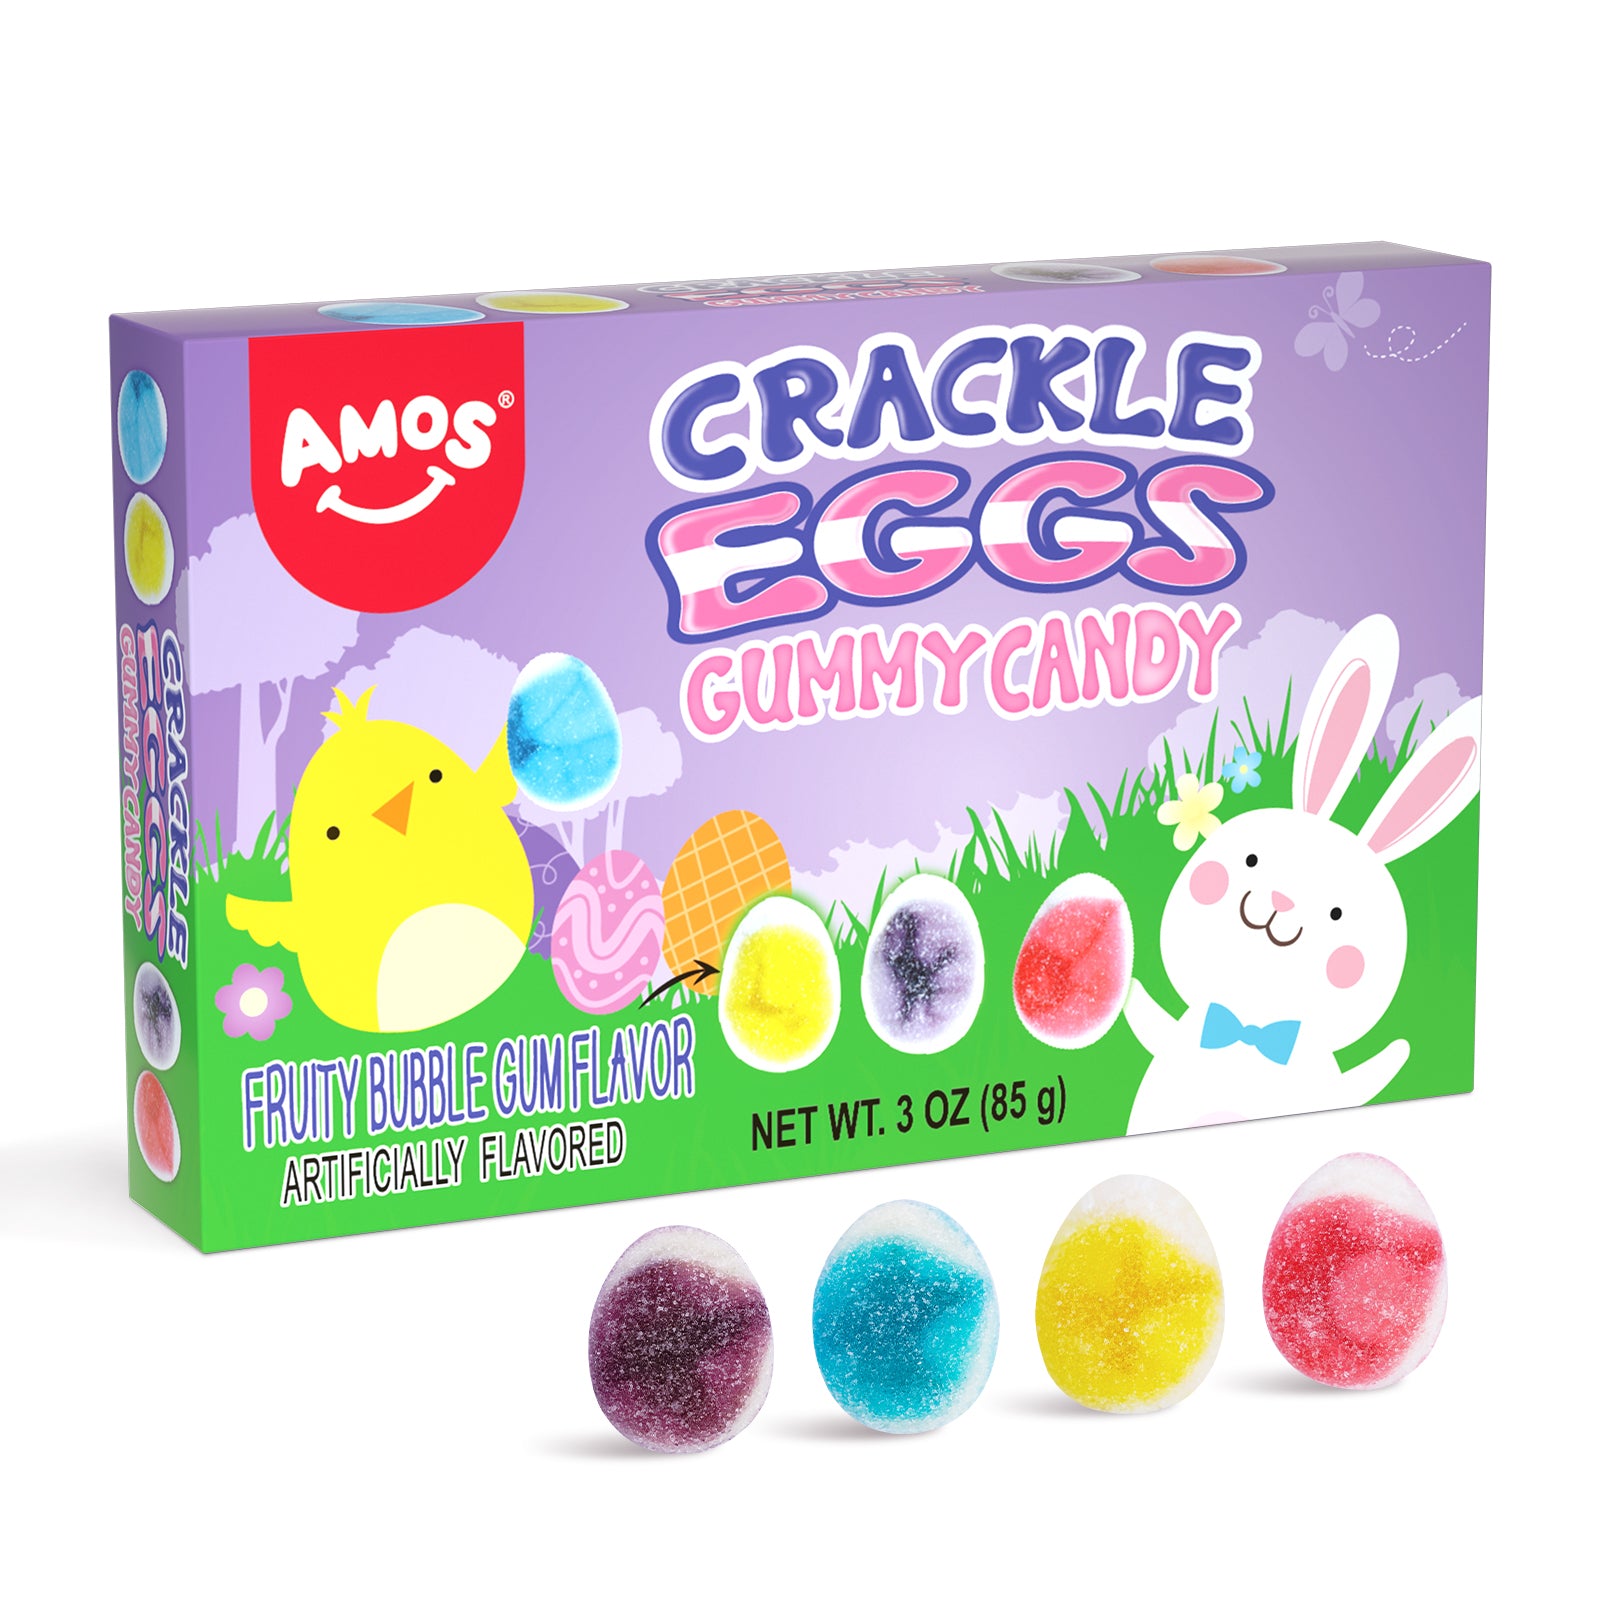 Easter Candy - 4D Crackle Eggs Gummy